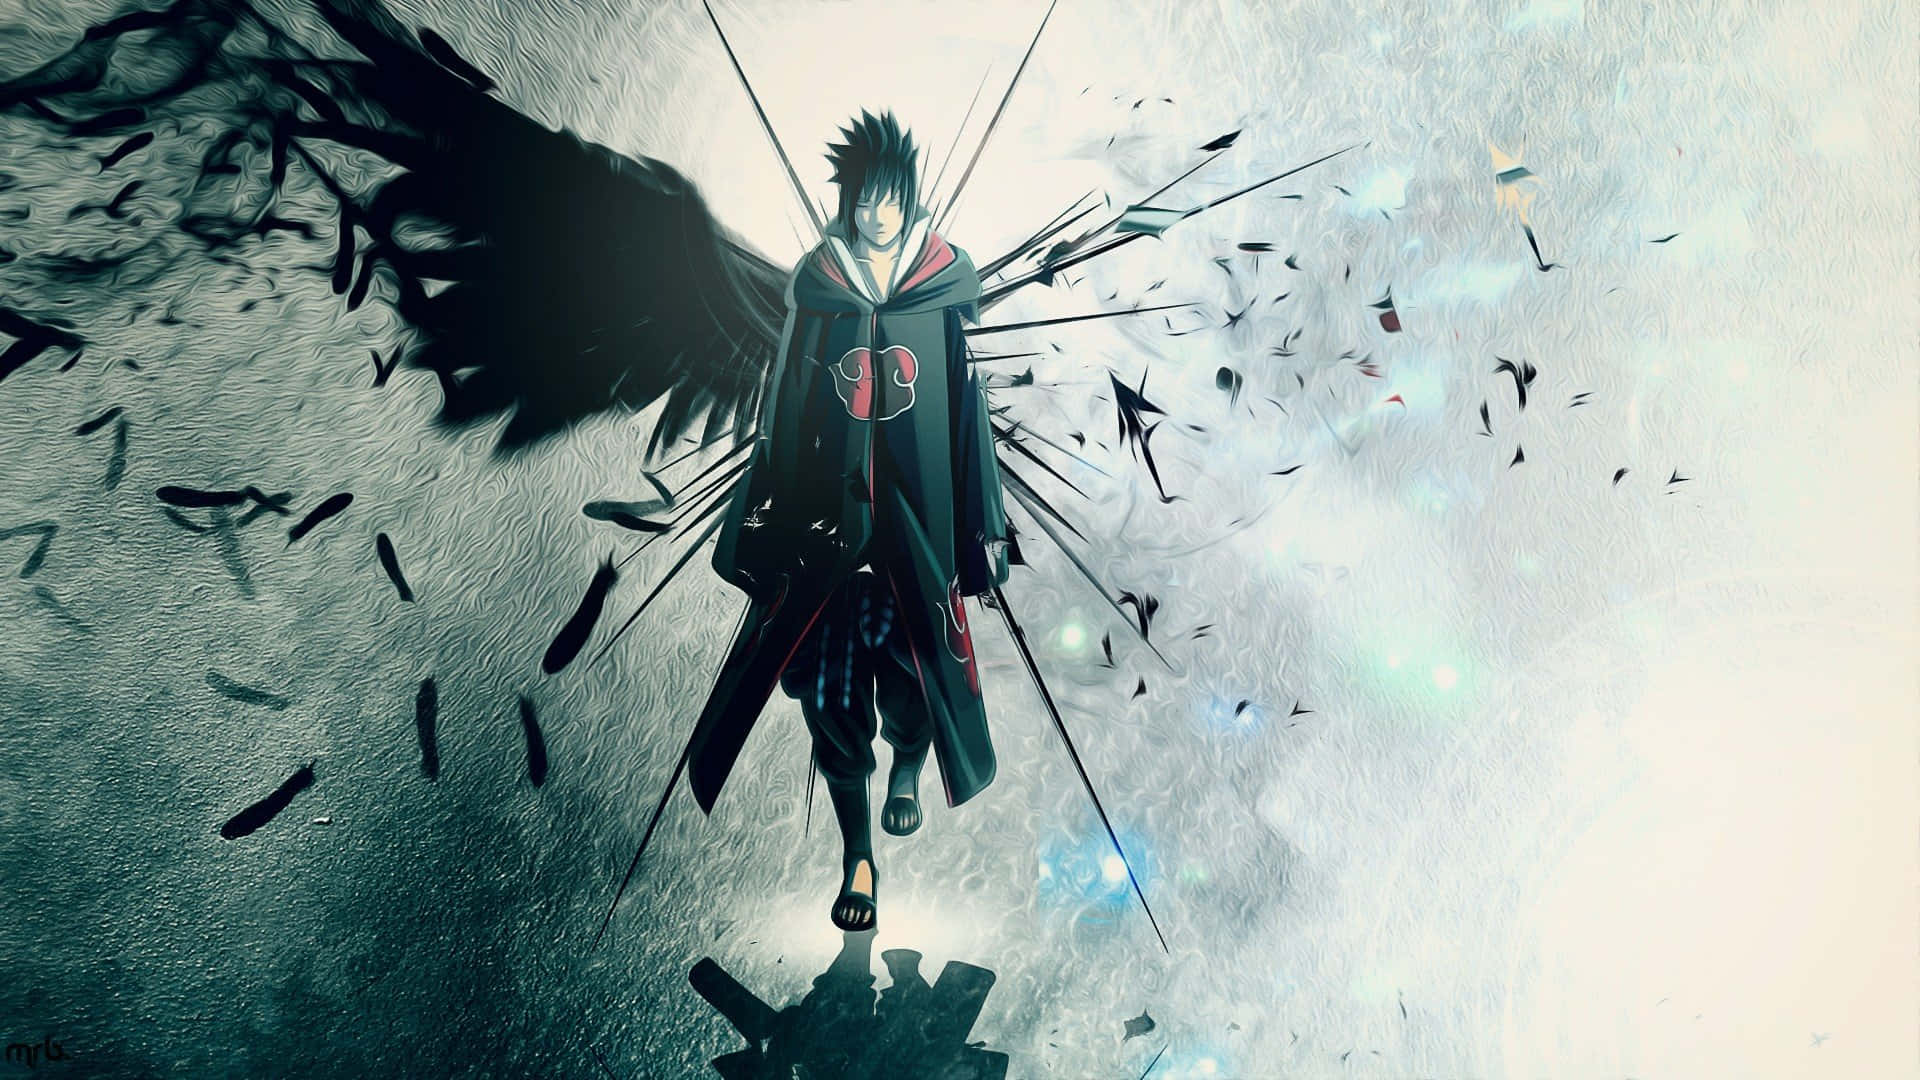 Akatsuki Sasuke Ready for a Fight" Wallpaper